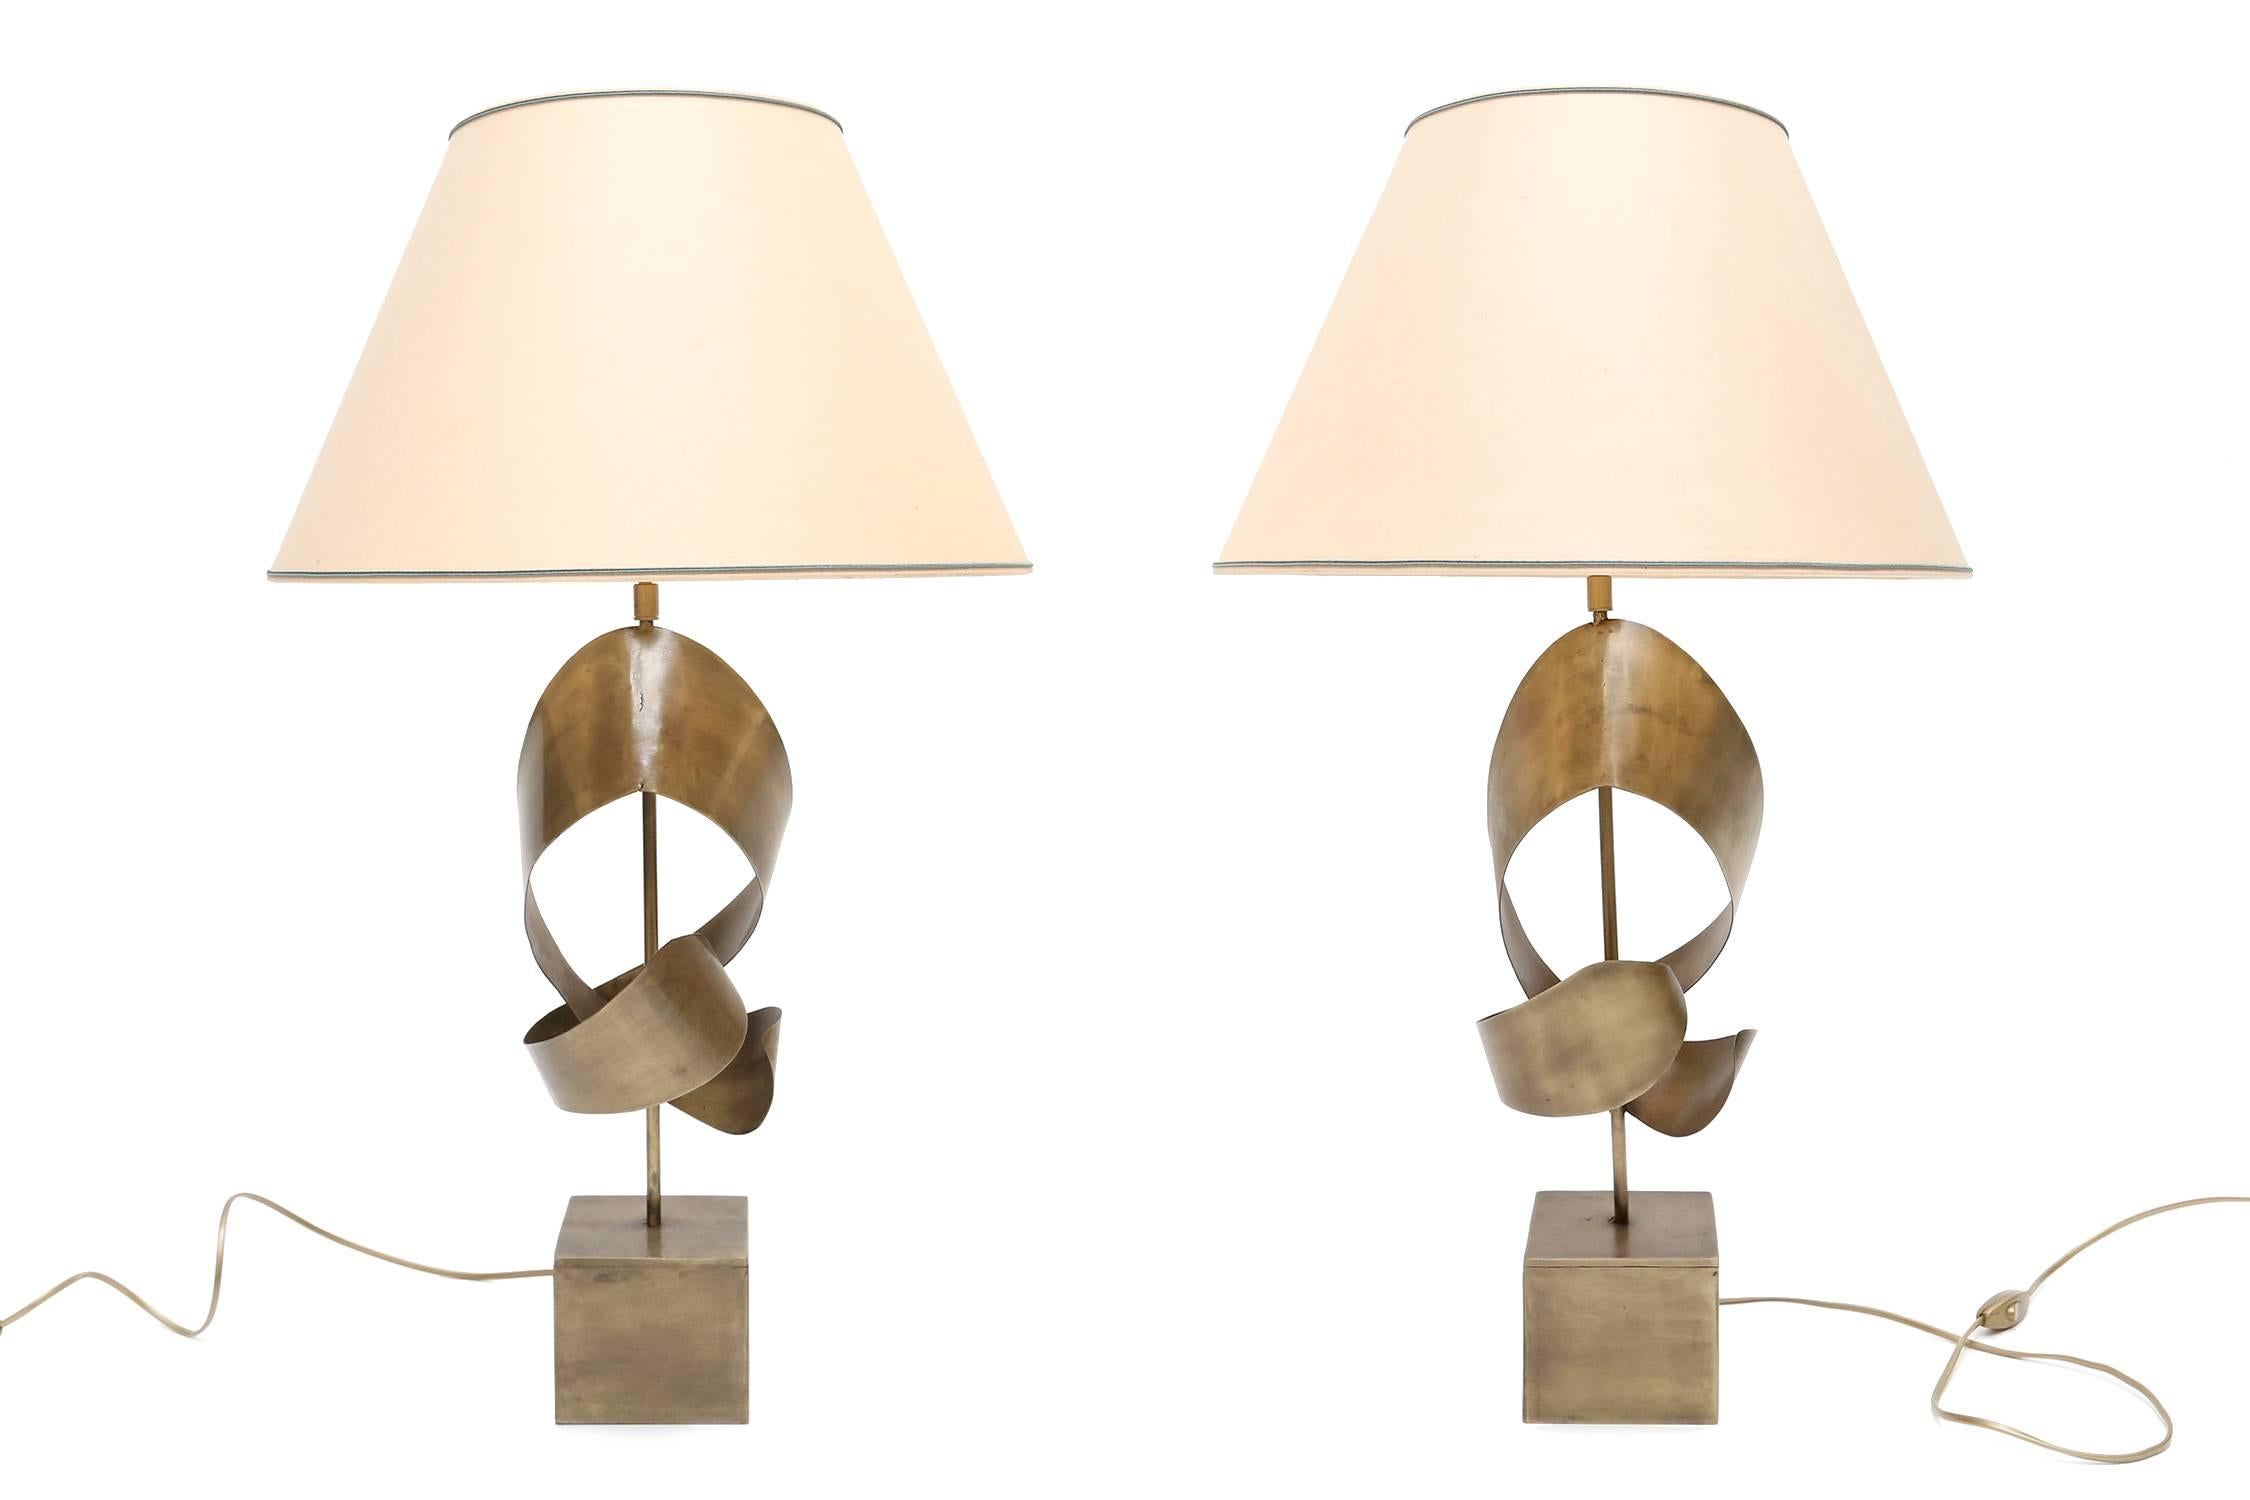 Pair of 1970s sculptural brass table lamps 
original white linen shades.
European, France.
Measures: H 80 cm Ø 40 cm.